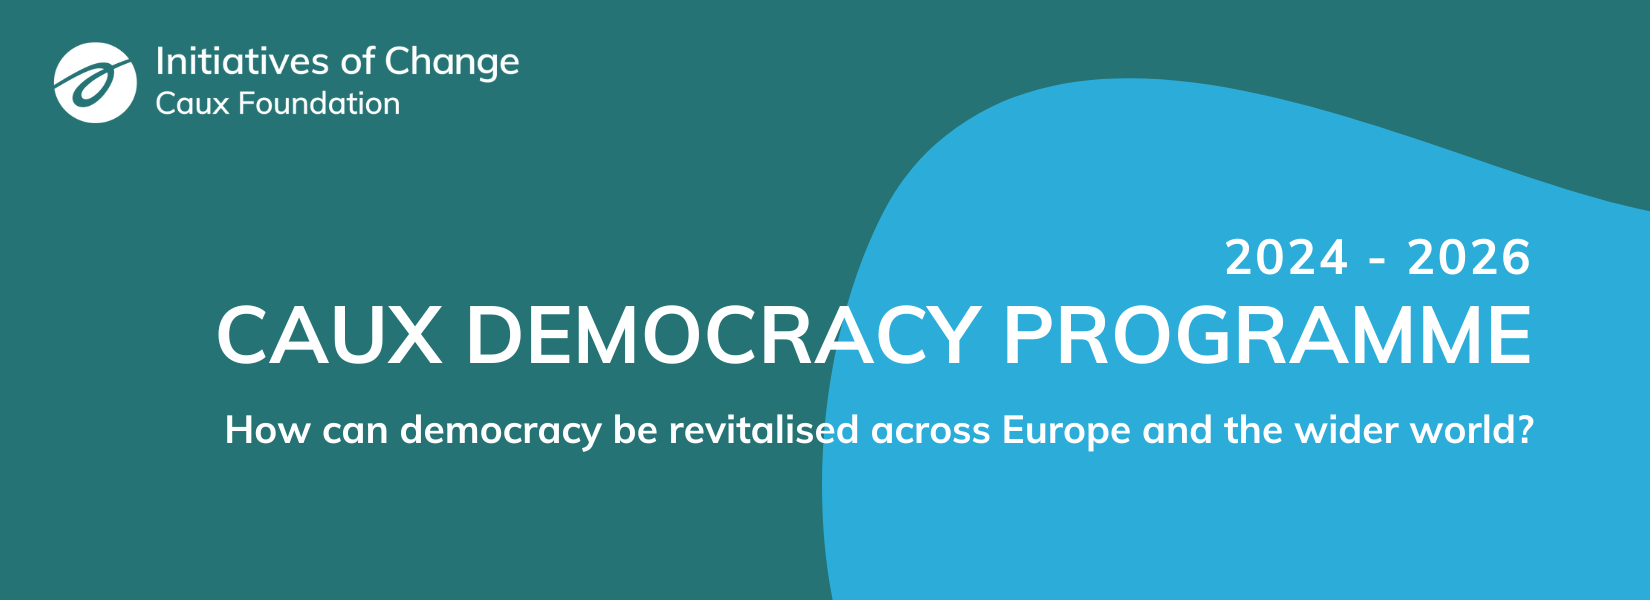 Caux Democracy Programme banner EN